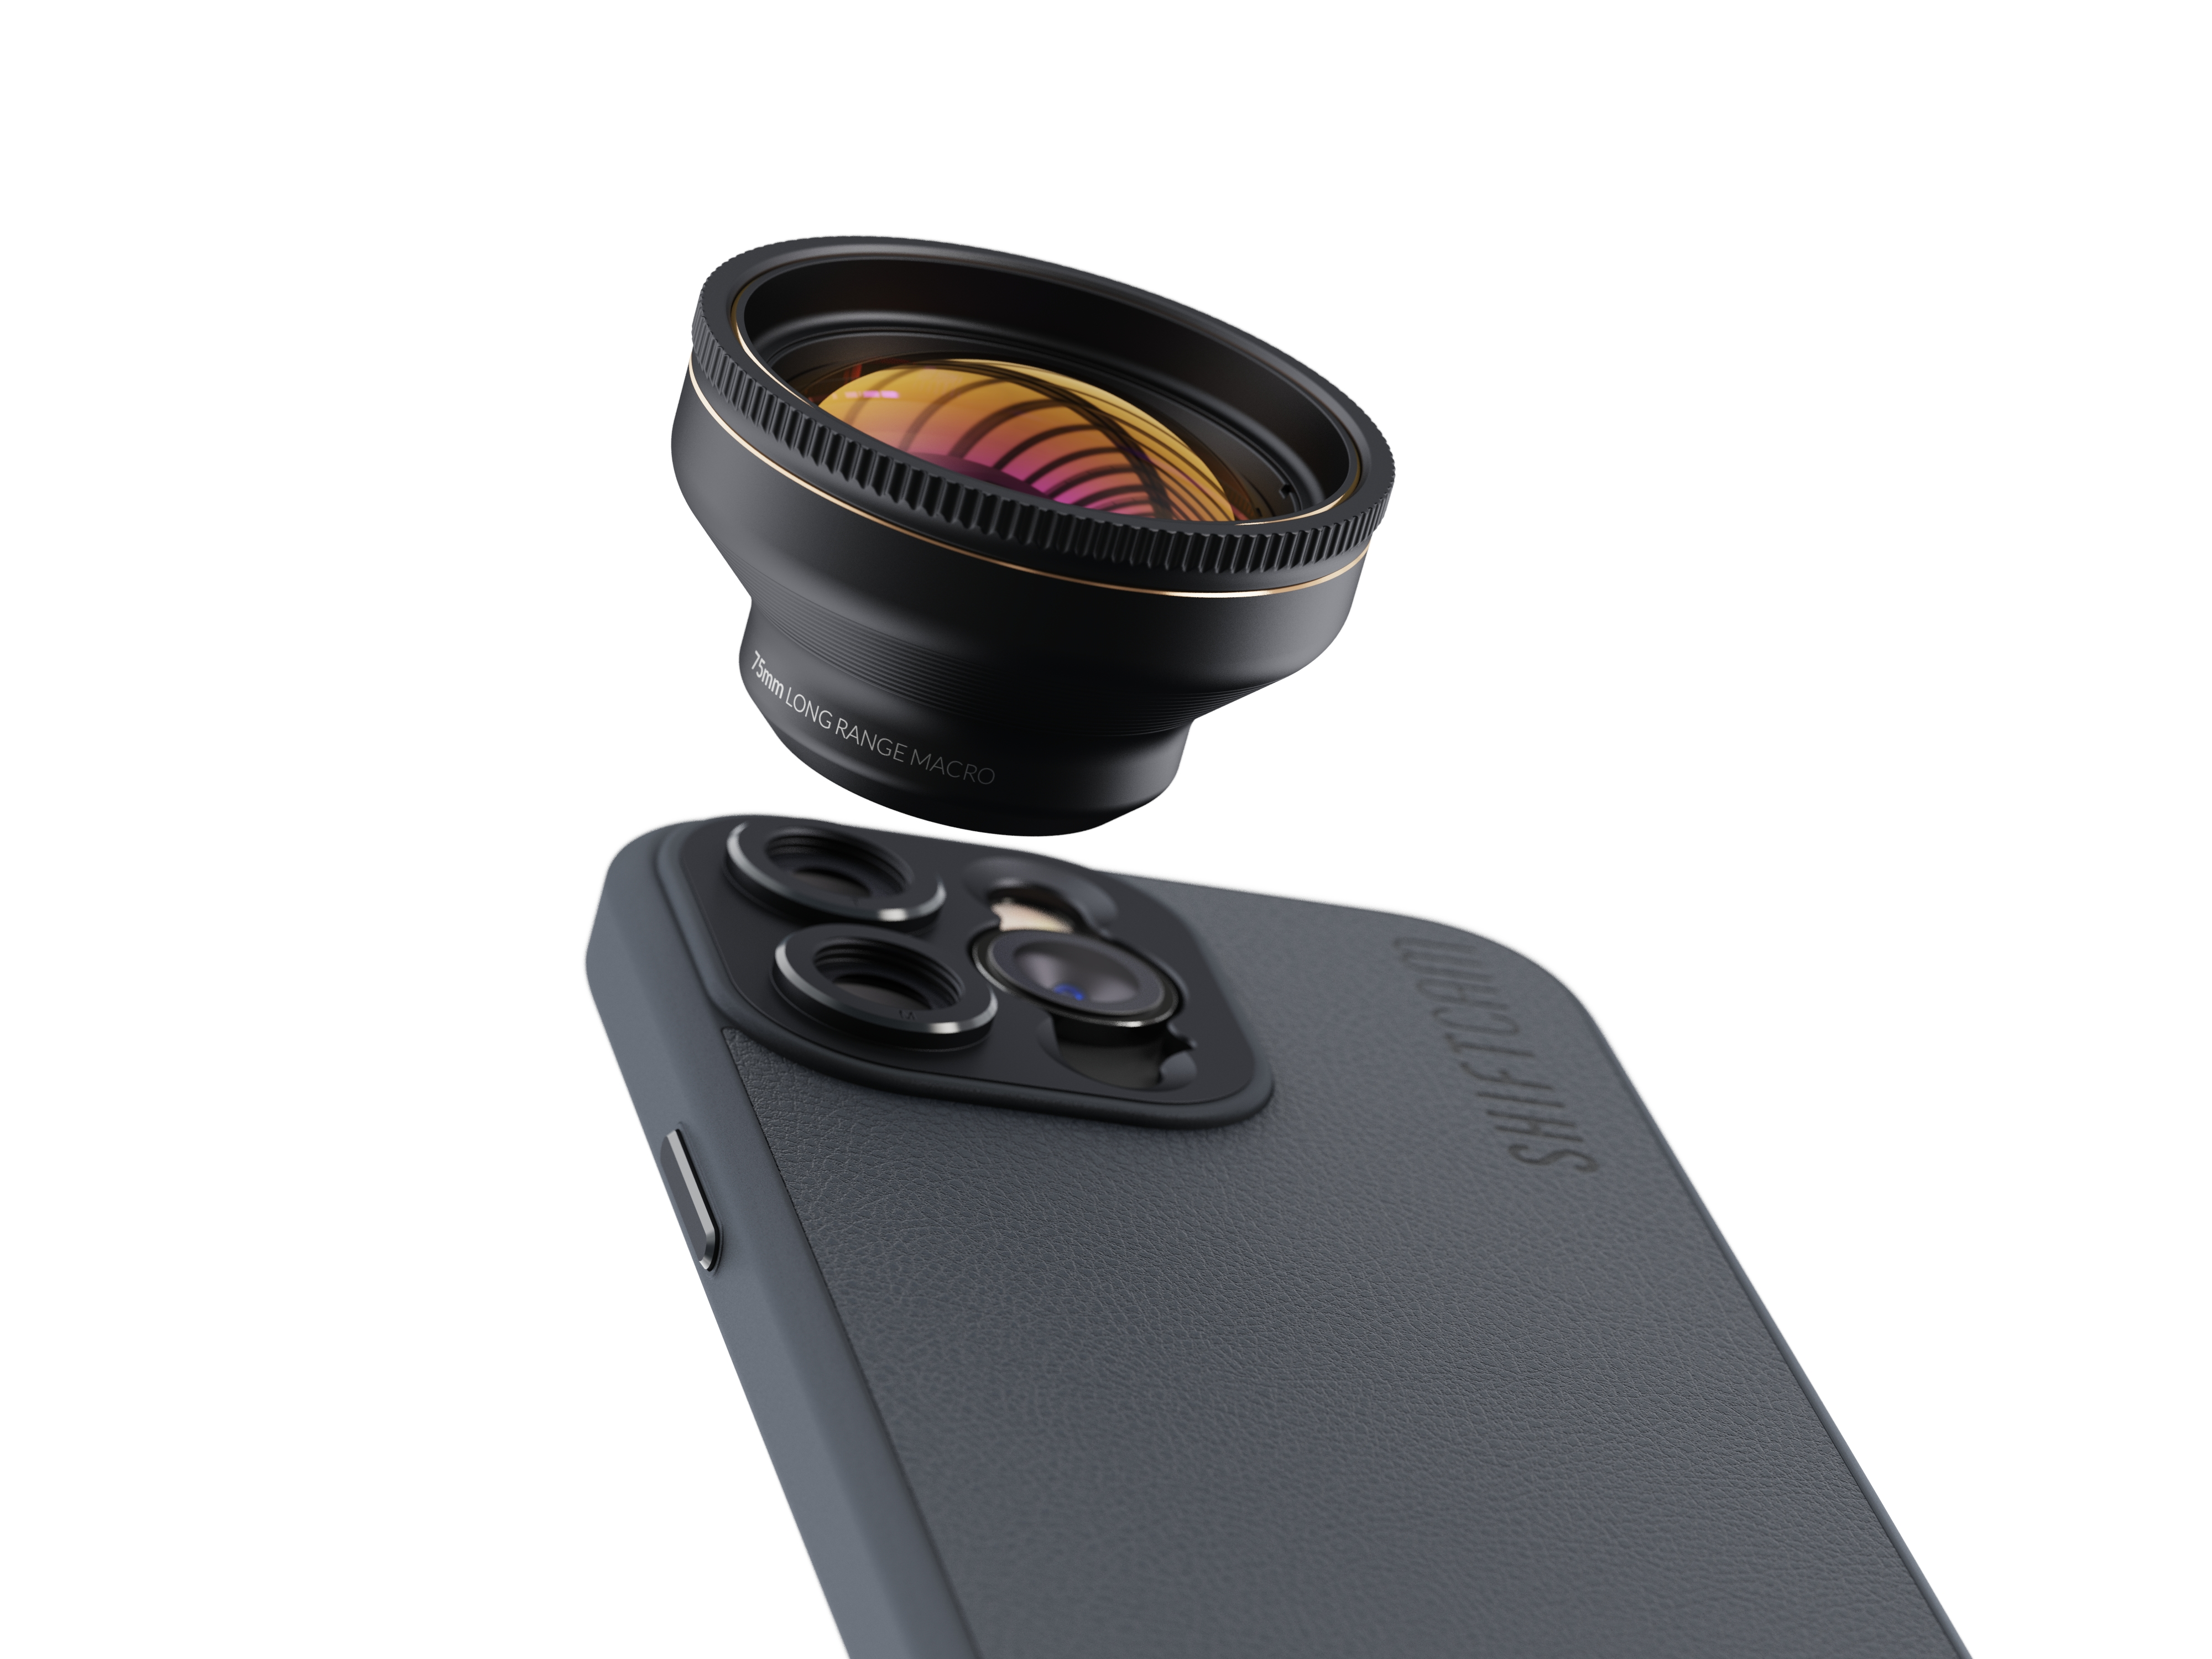 Range Makroobjektiv (Smartphone Objektiv - für Long T2-Mount 75mm - Smartphone LensUltra SHIFTCAM Macro